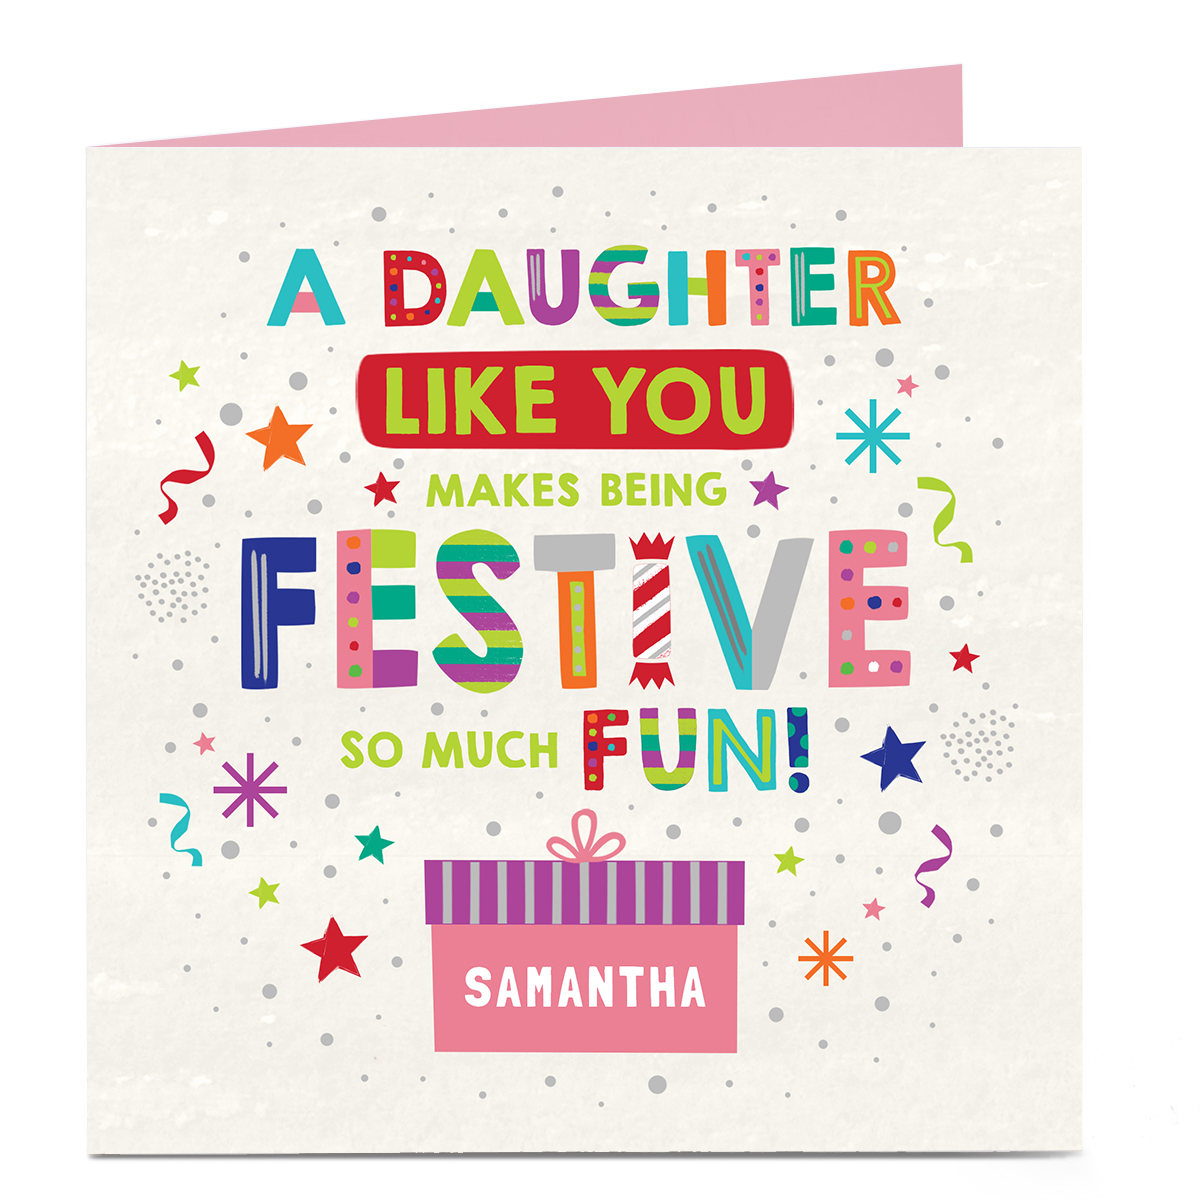 Personalised Christmas Card - Bright Festive Fun, Daughter